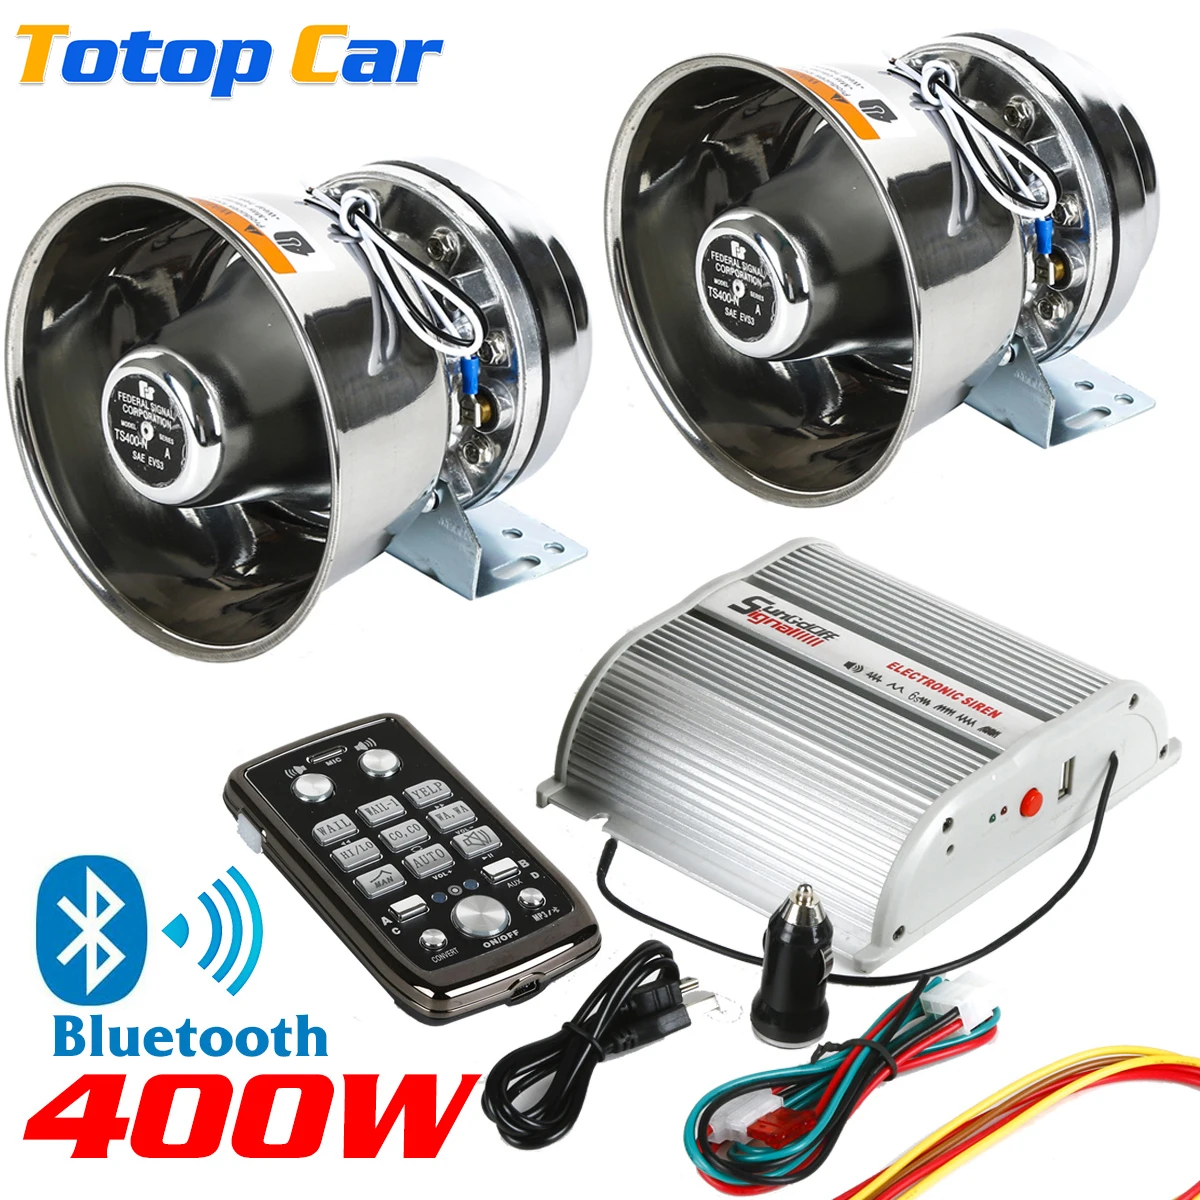 400W Car Loud Sound Speaker, 12V Megaphone Electronic Speaker PA Siren Horn Alarm System Police Fire Kit with Bluetooth Function